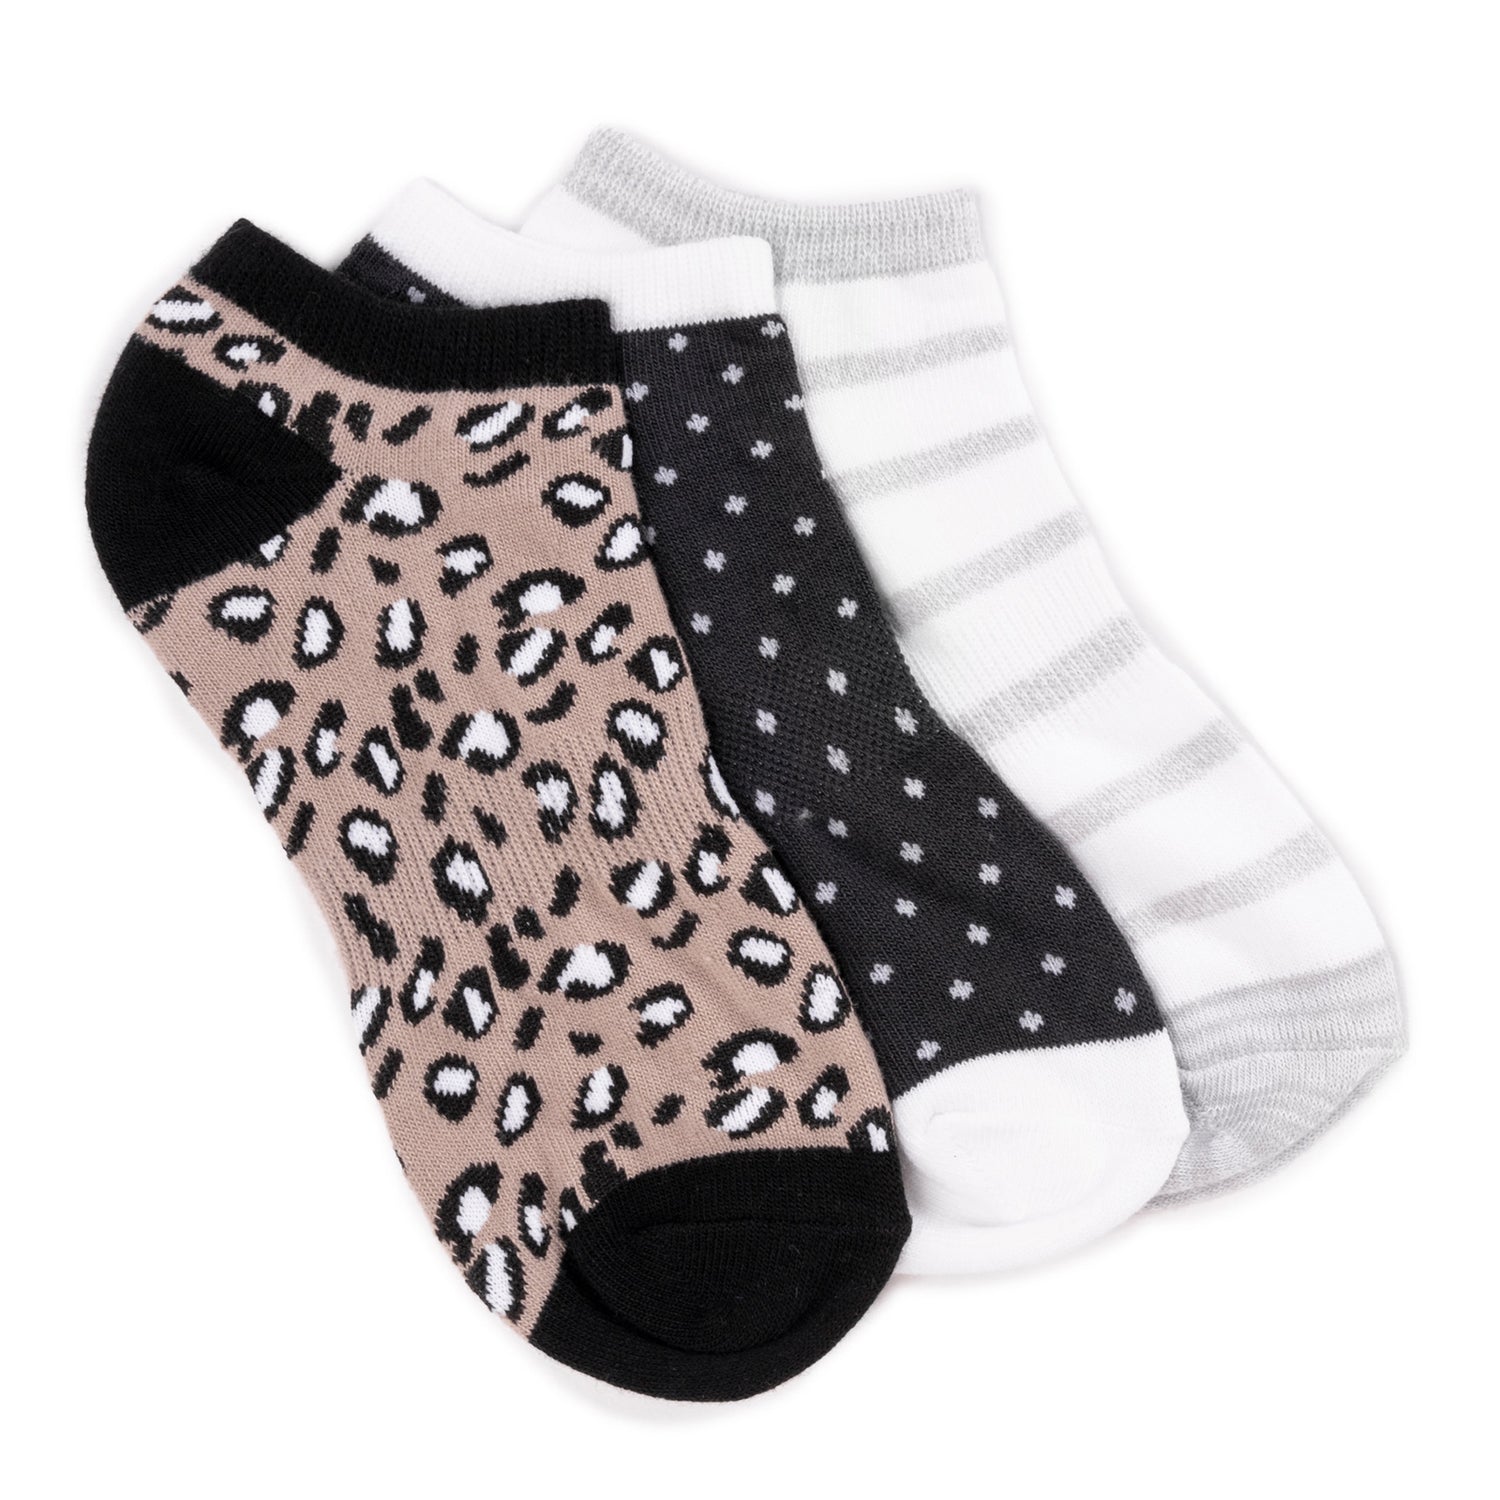 Peltz Shoes  Women's Muk Luks Ankle Socks - 3 Pack Neutral Mix 29999-999